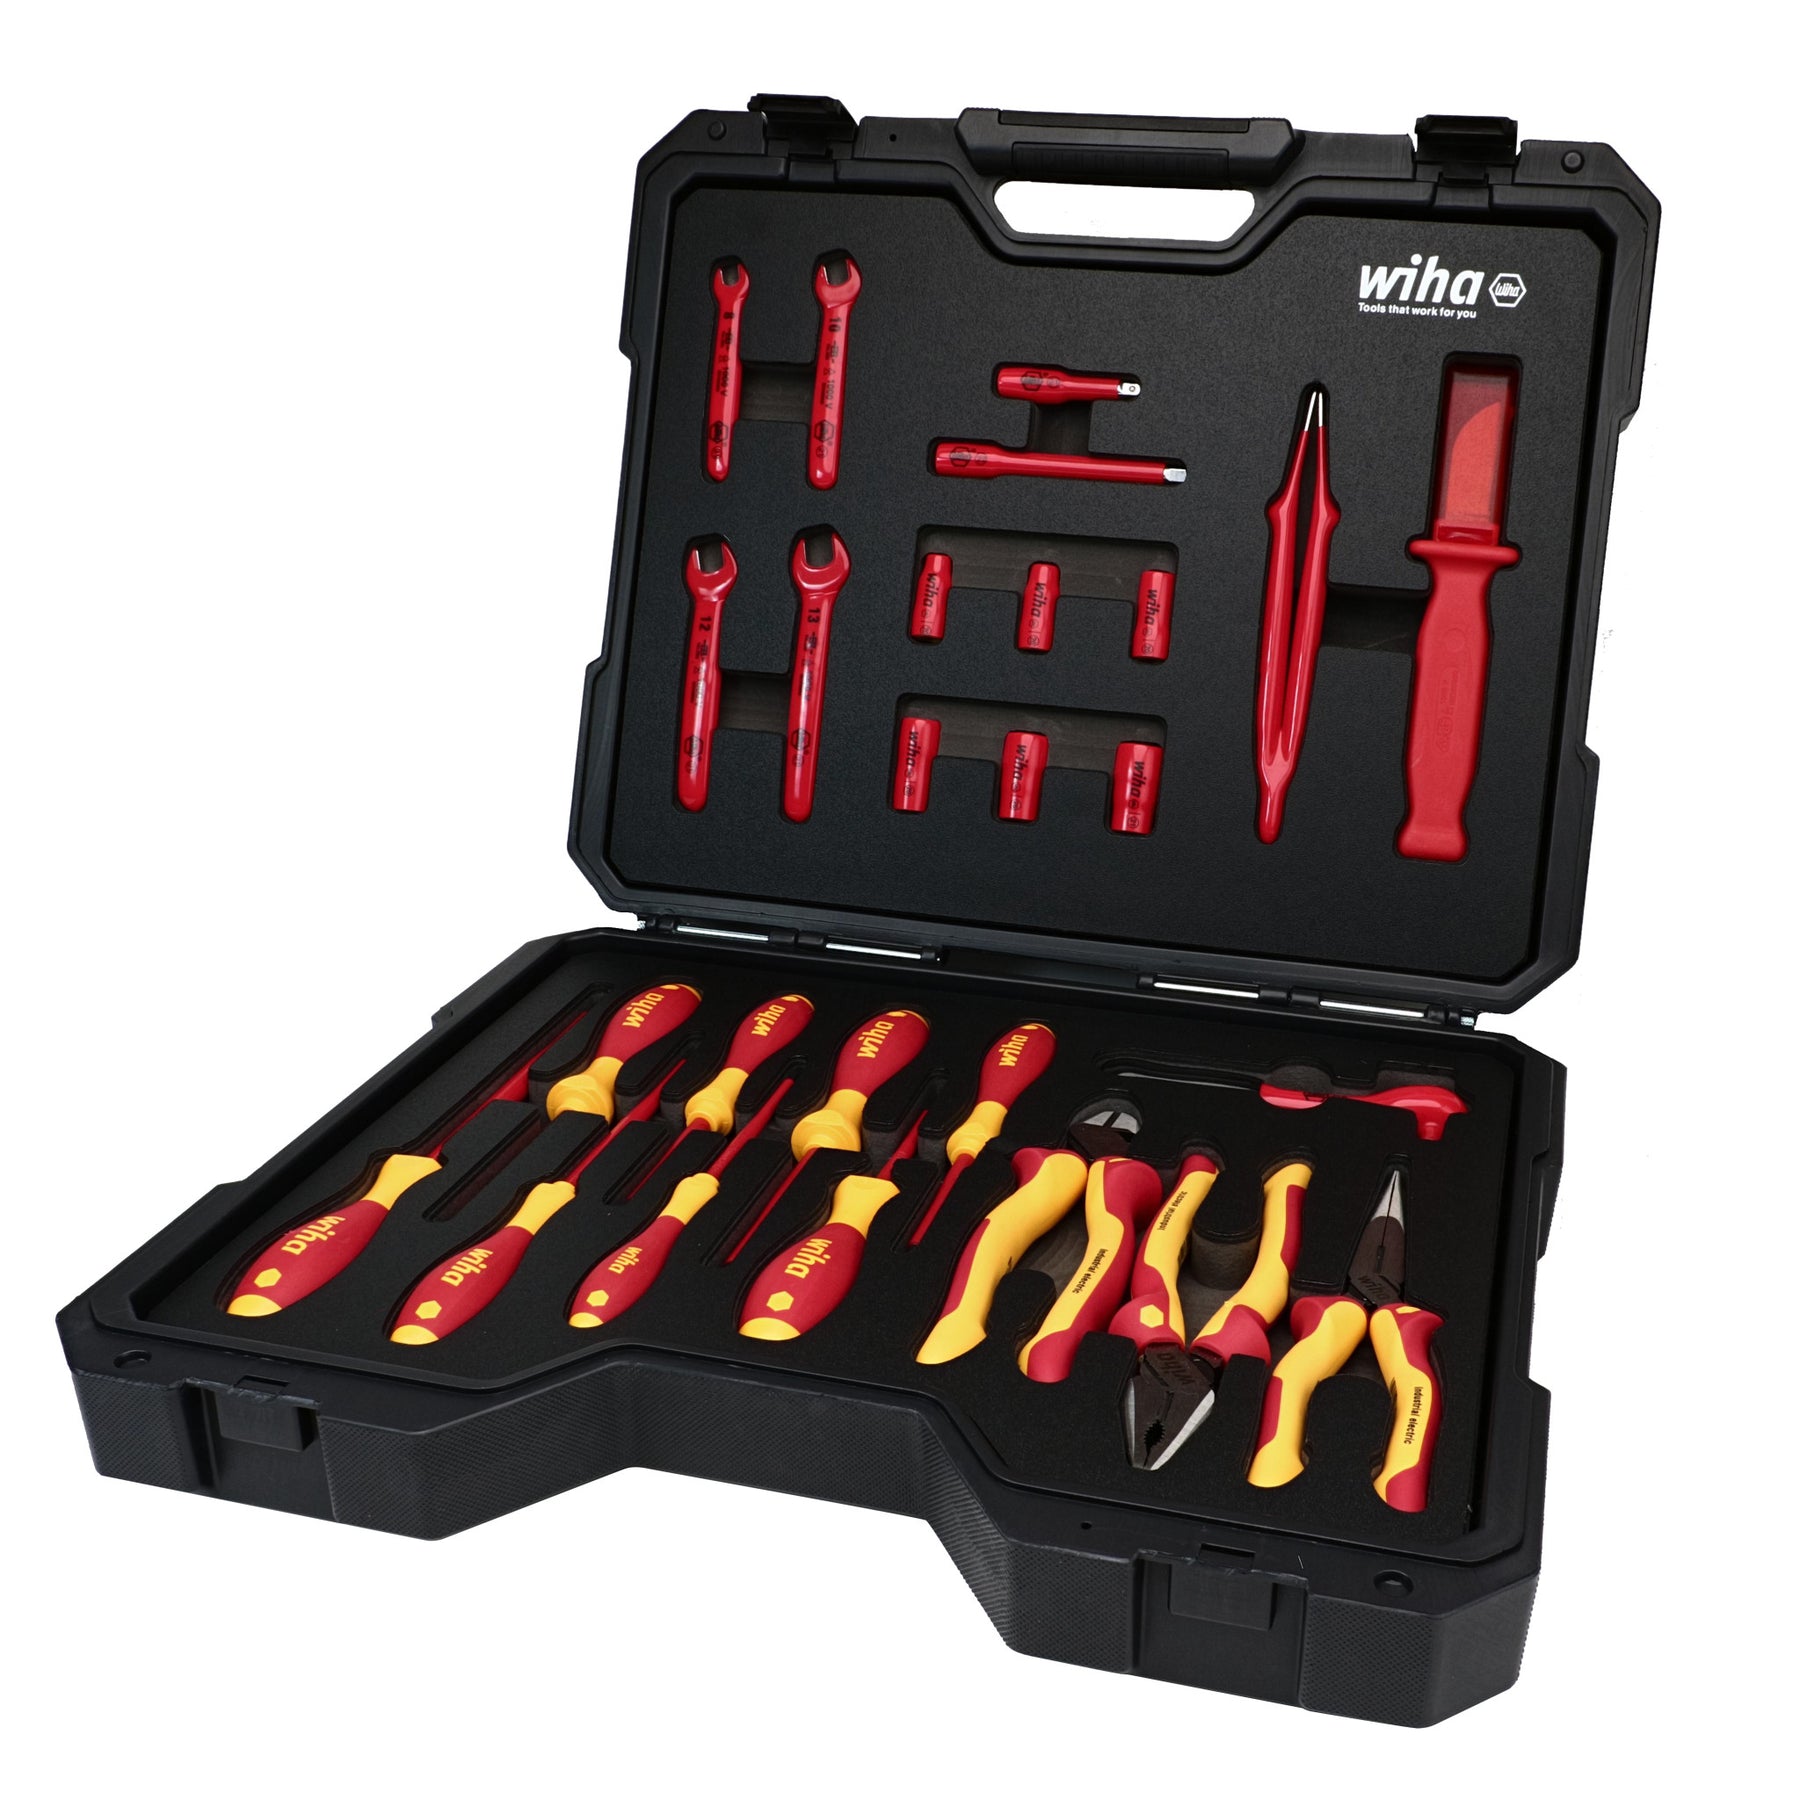 Wiha 91890 26 Piece Insulated Hybrid & EV Essential Tool Kit